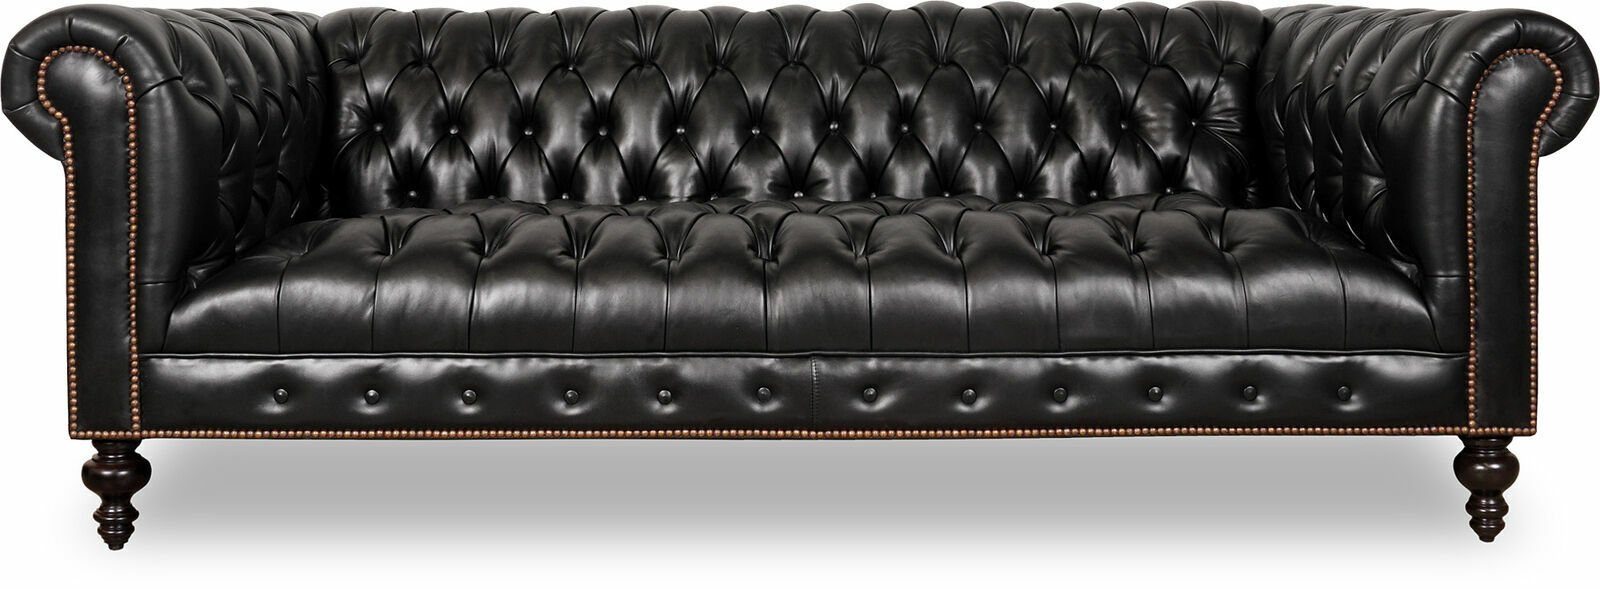 JVmoebel Chesterfield-Sofa Leder Sofa Chesterfield Couch England Schwarz 100% Leder Sofort, 1 Teile, Made in Europa